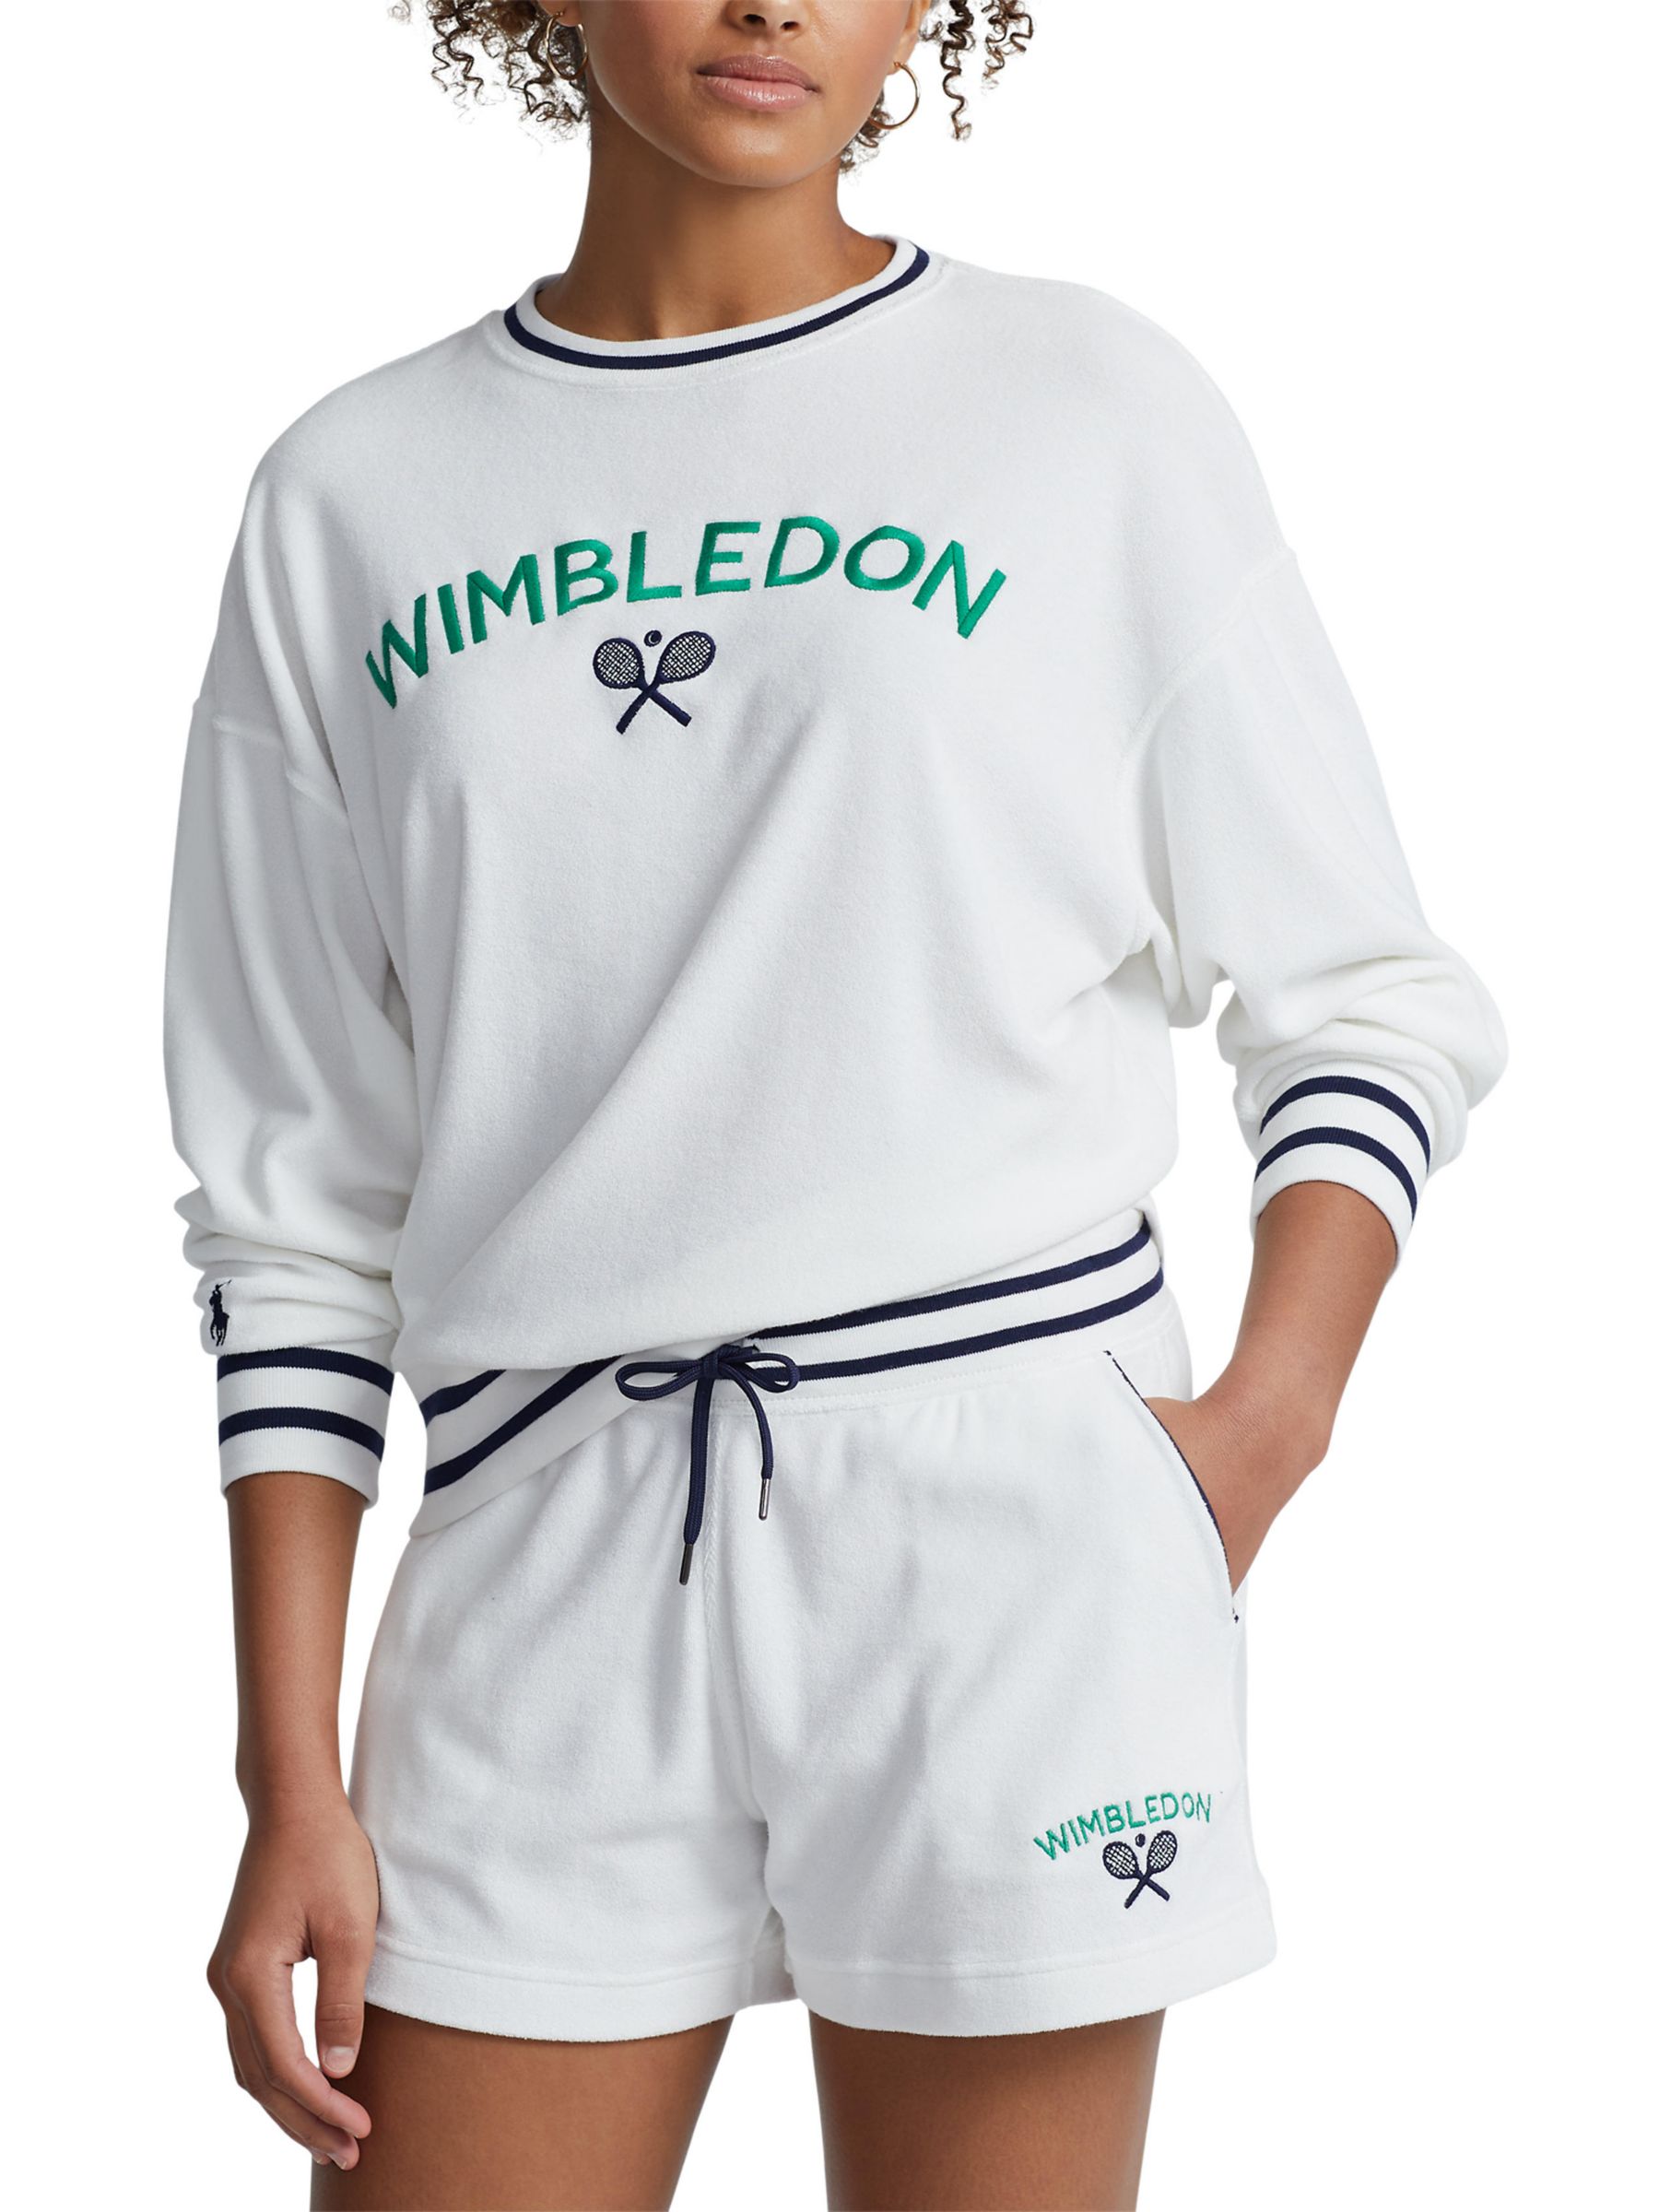 Polo Ralph Lauren Wimbledon Sweater, Pure White, XS